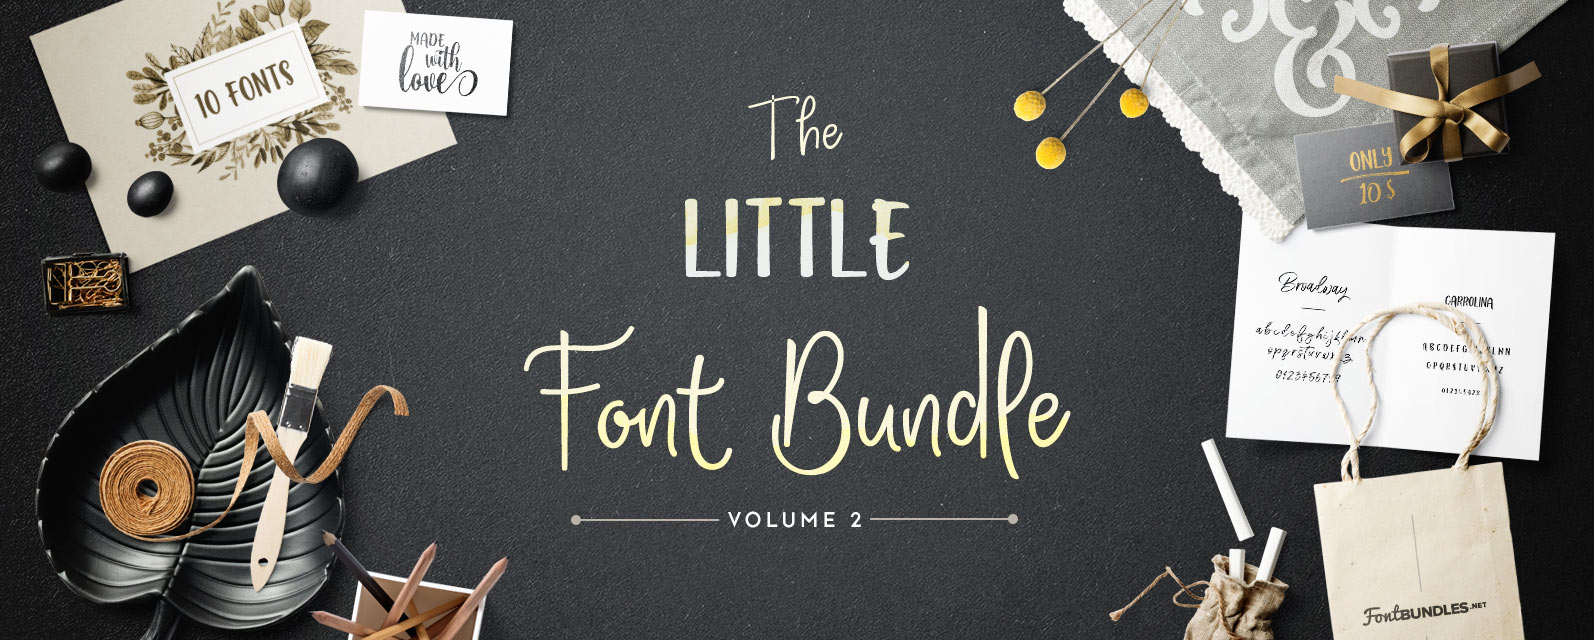 Little Font Bundle Volume II